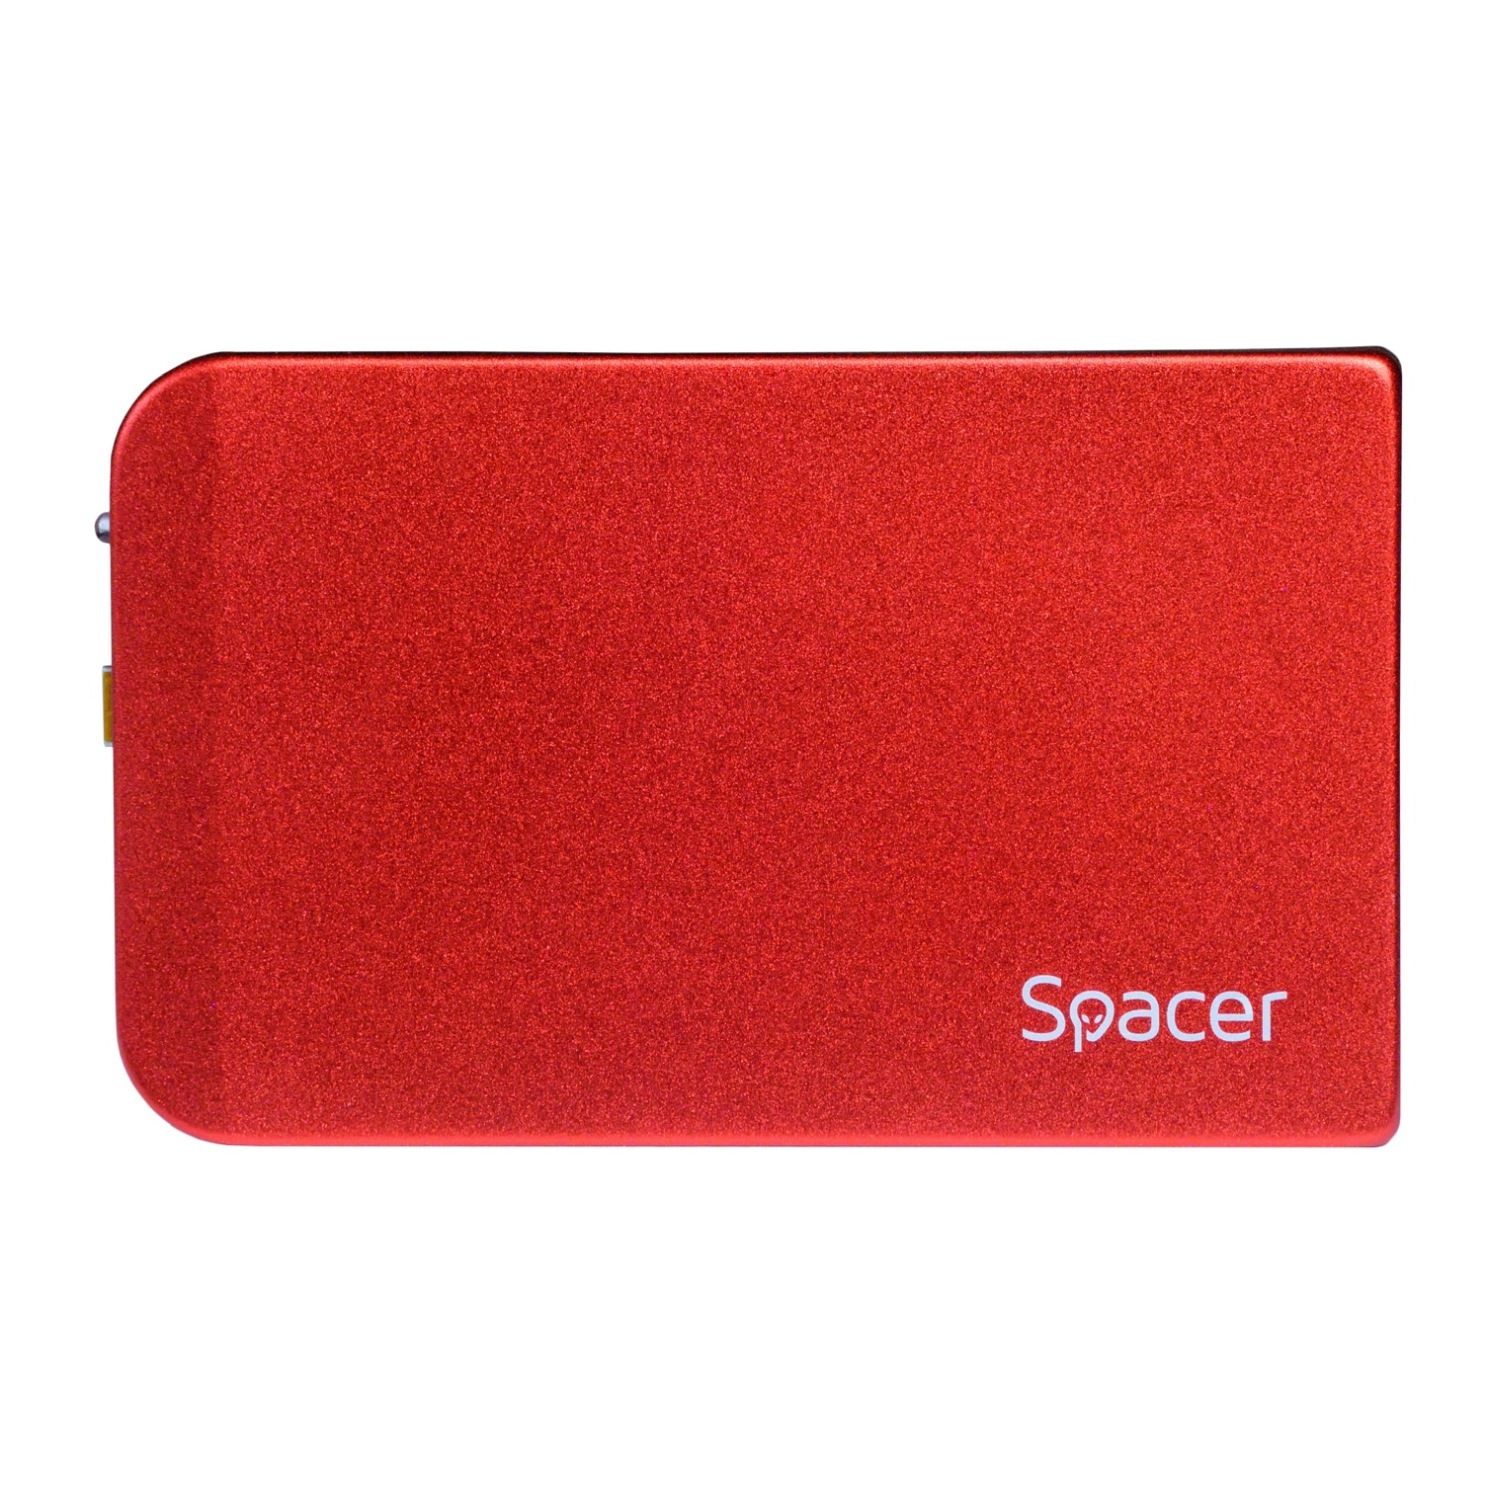 RACK extern SPACER, pt HDD/SSD, 2.5 inch, S-ATA, interfata PC USB 3.0, plastic, Bleu, 